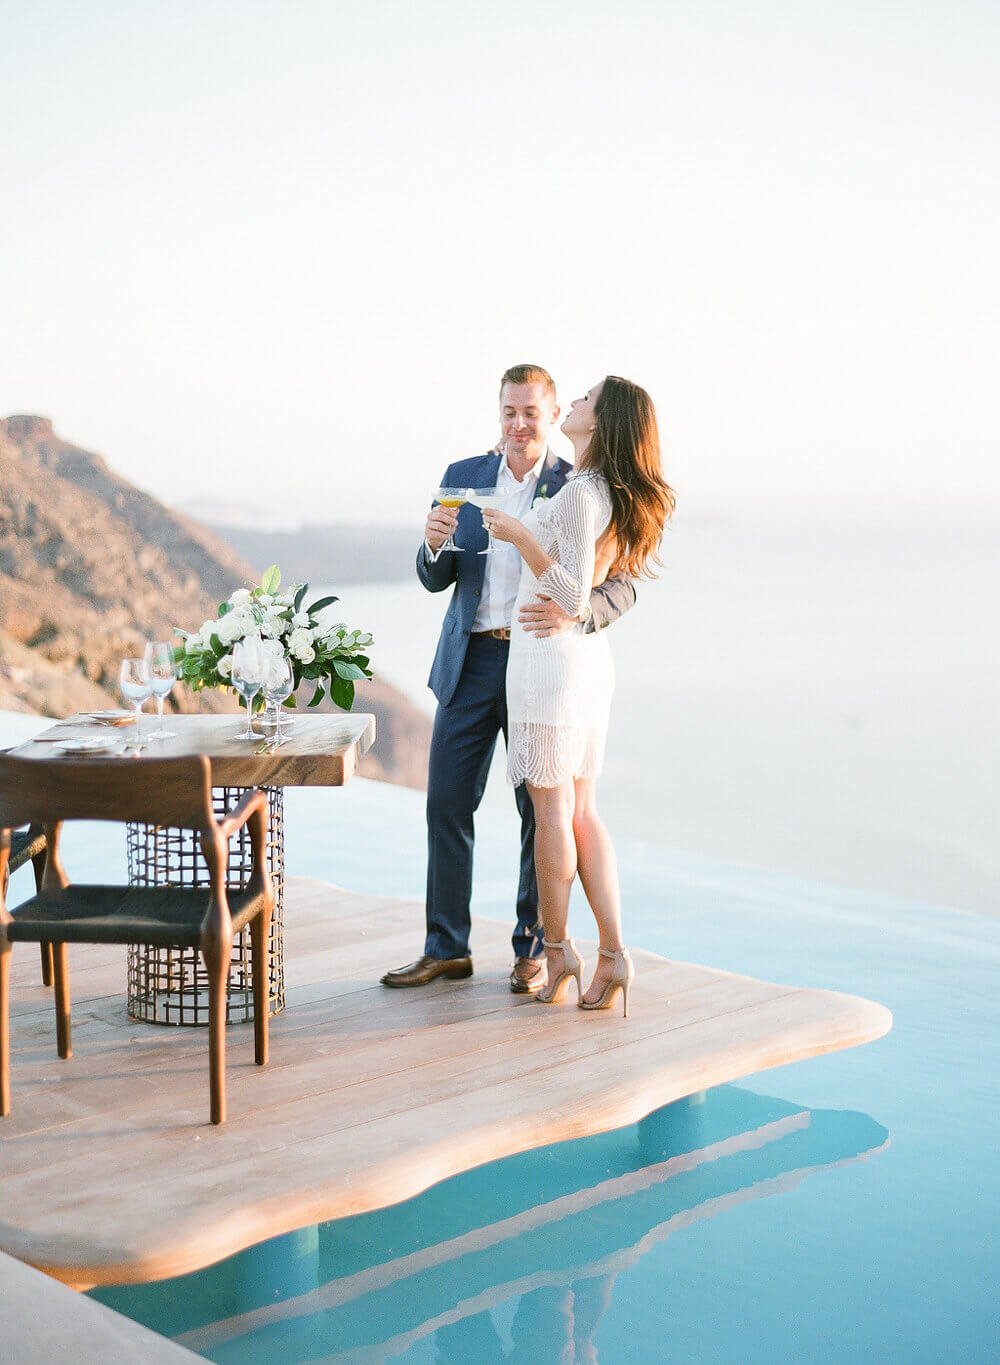 Santorini film wedding photographer Les Ananou | glam intimate elopement